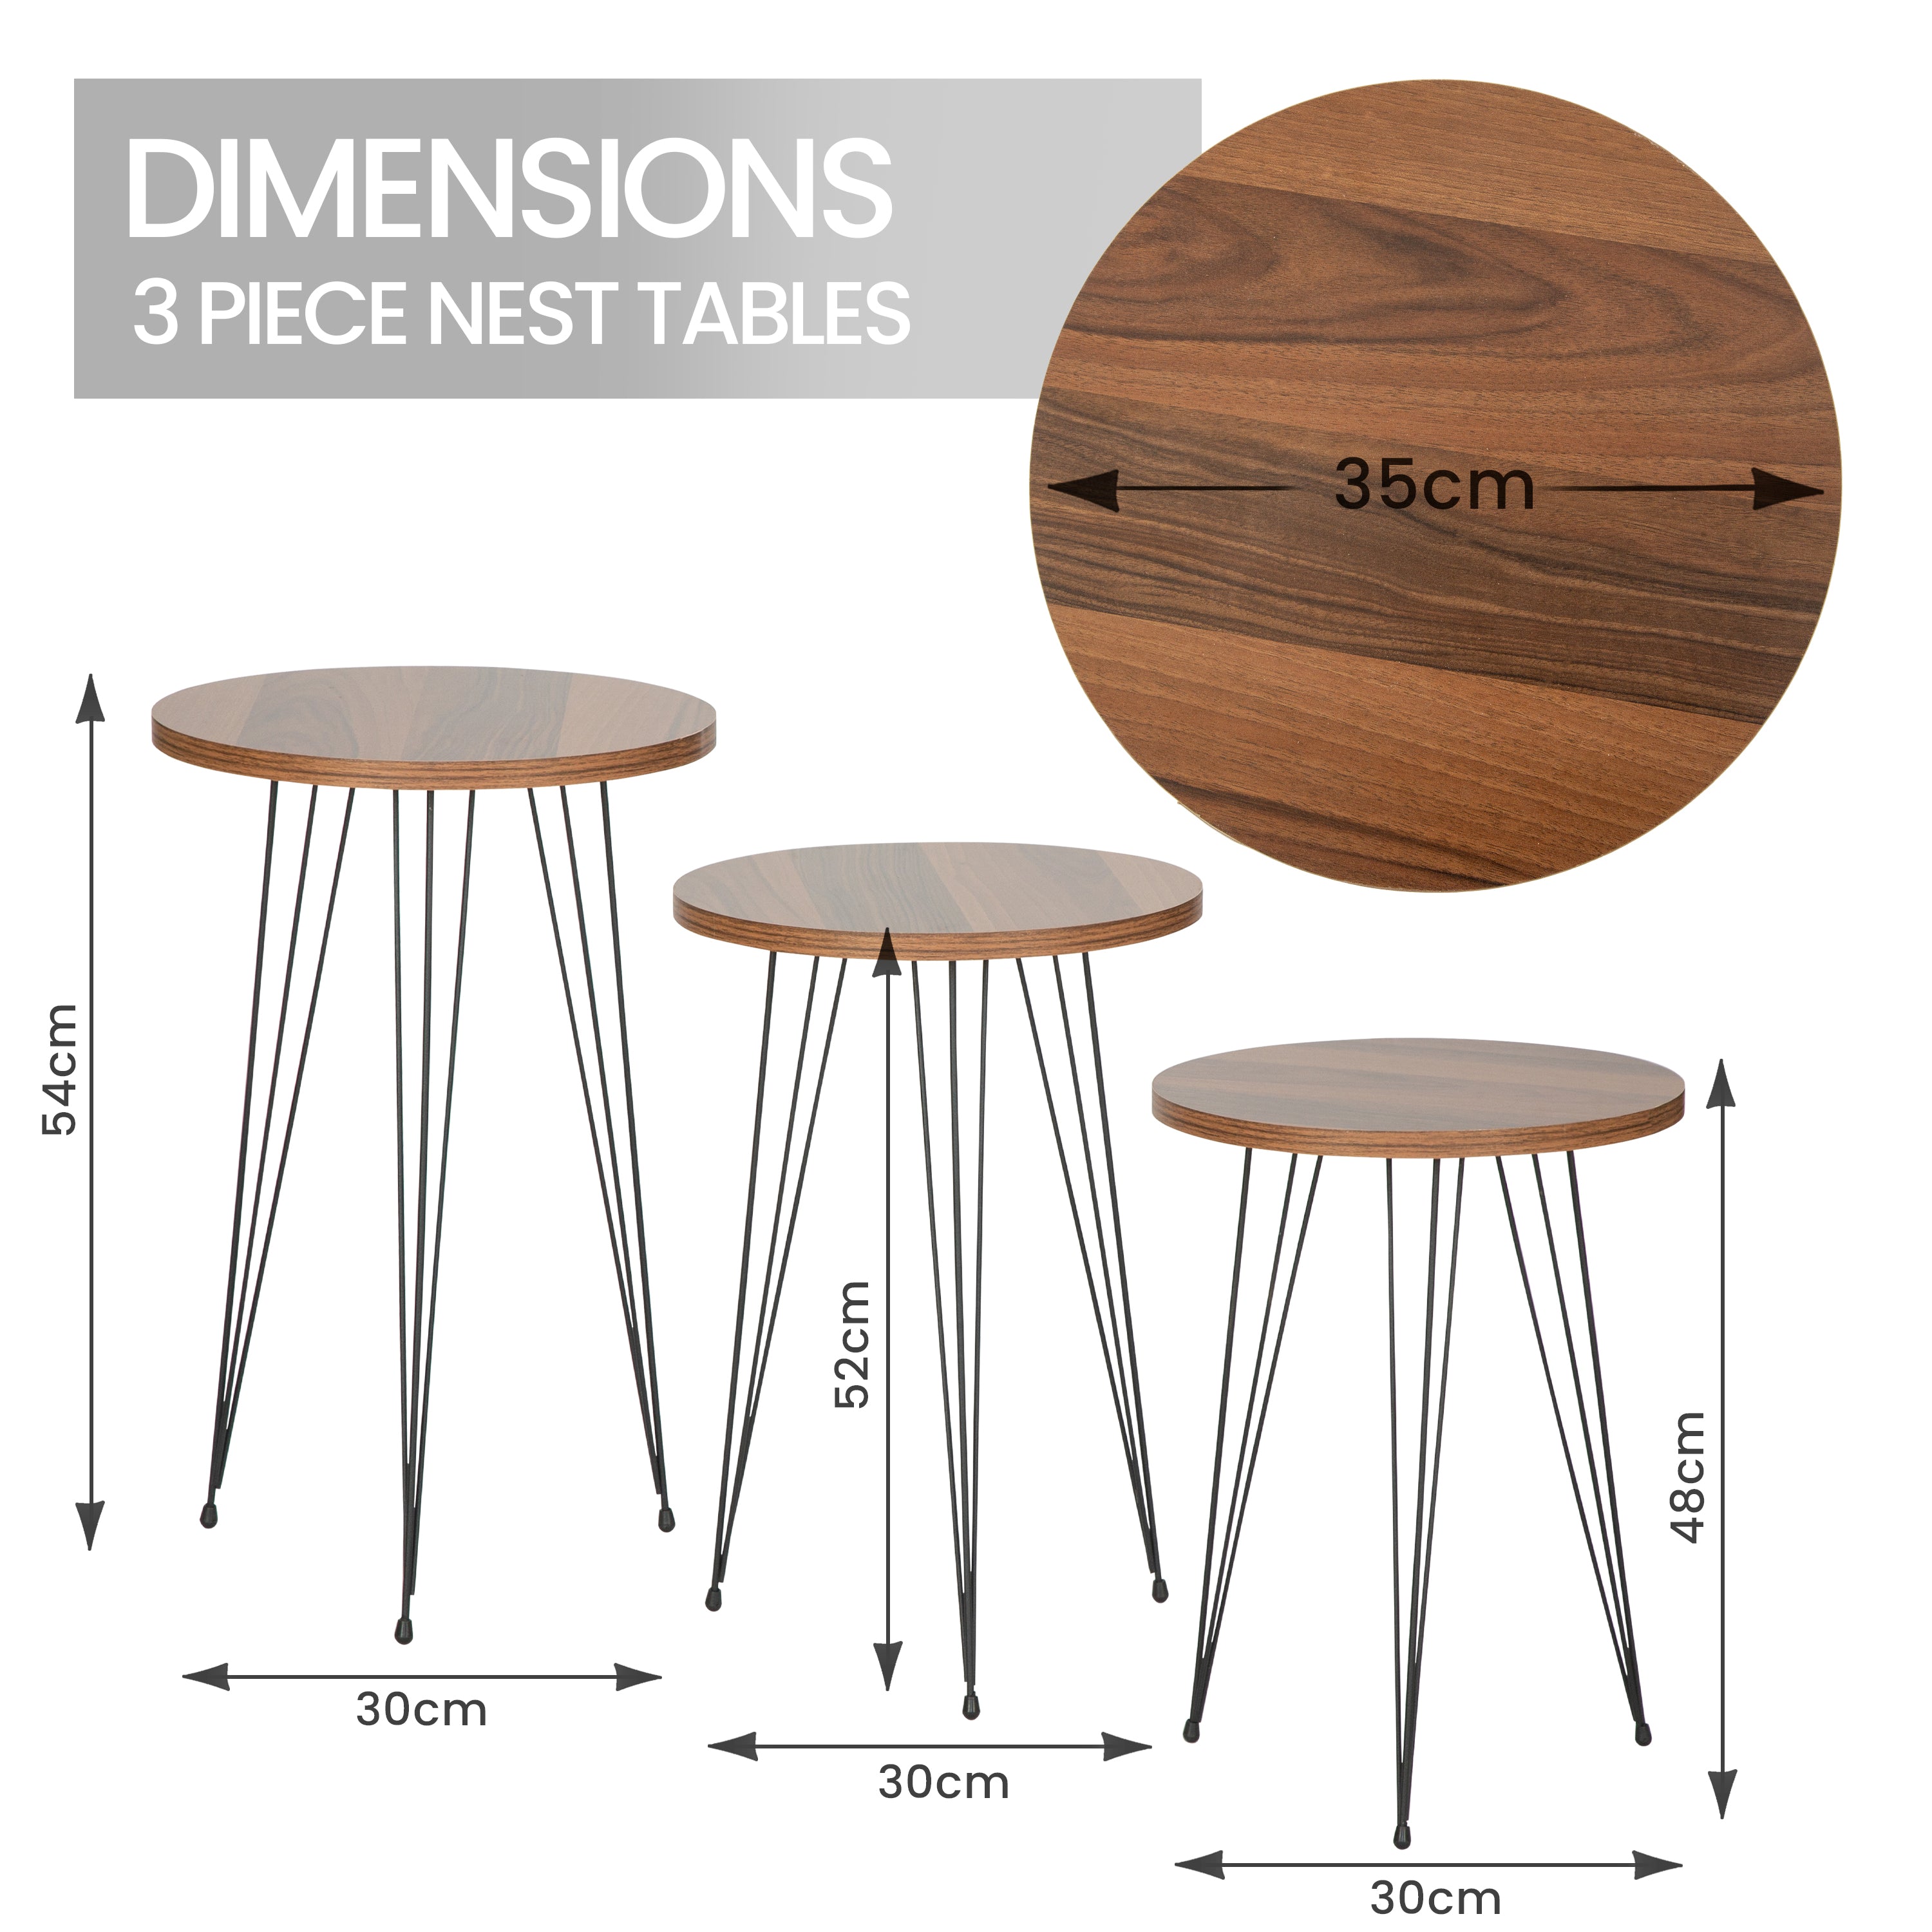 Terek Set of 3 Round Side Tables - Walnut Wood